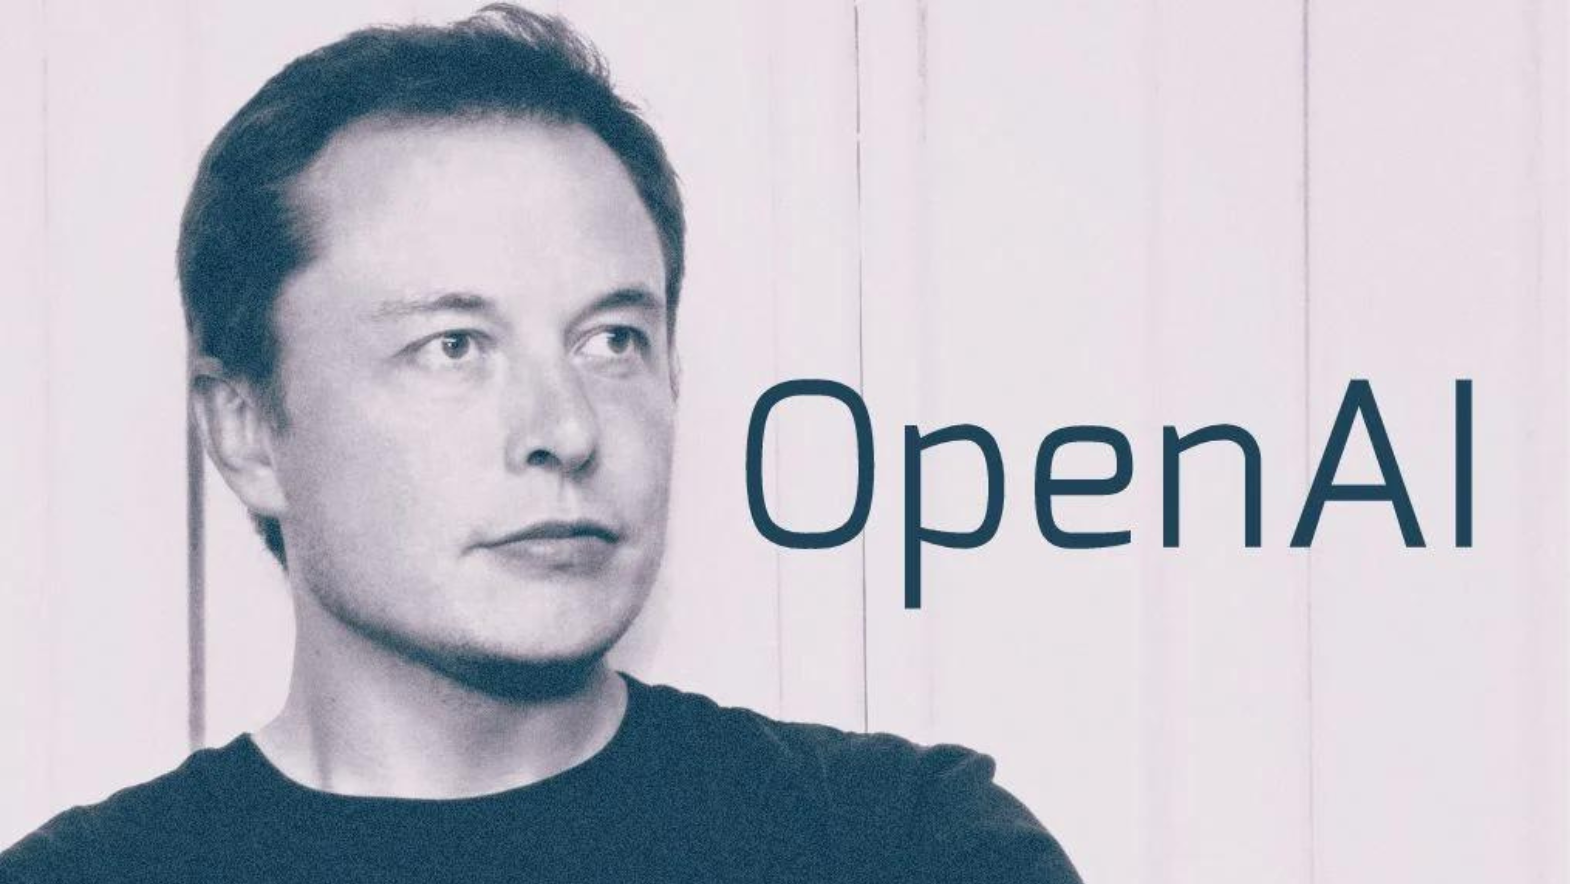 Elon Musk. Илон маскopenai. OPENAL Илон Маск. Elon Musk ai. Chat openia com